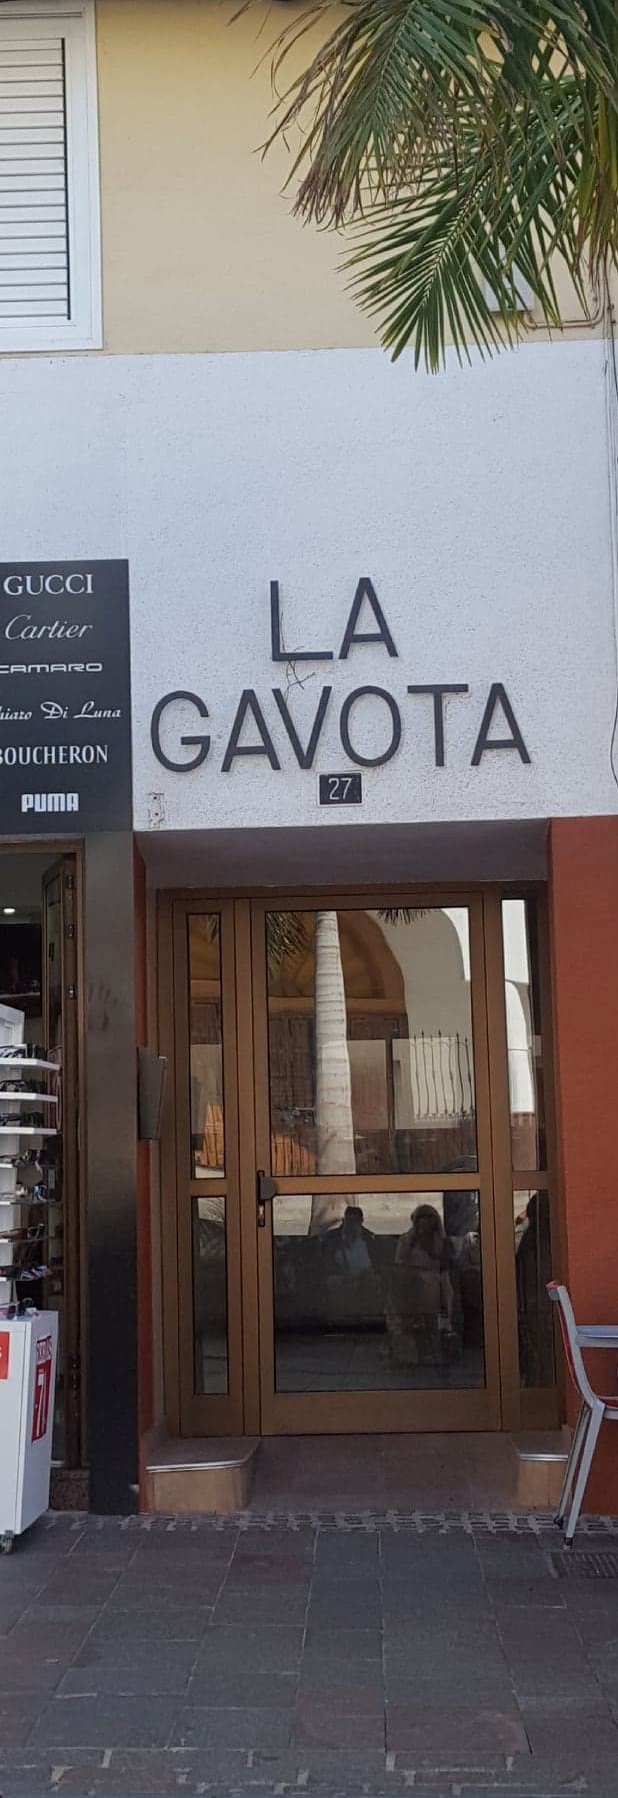 My stay in La Gavota, Los Cristianos.